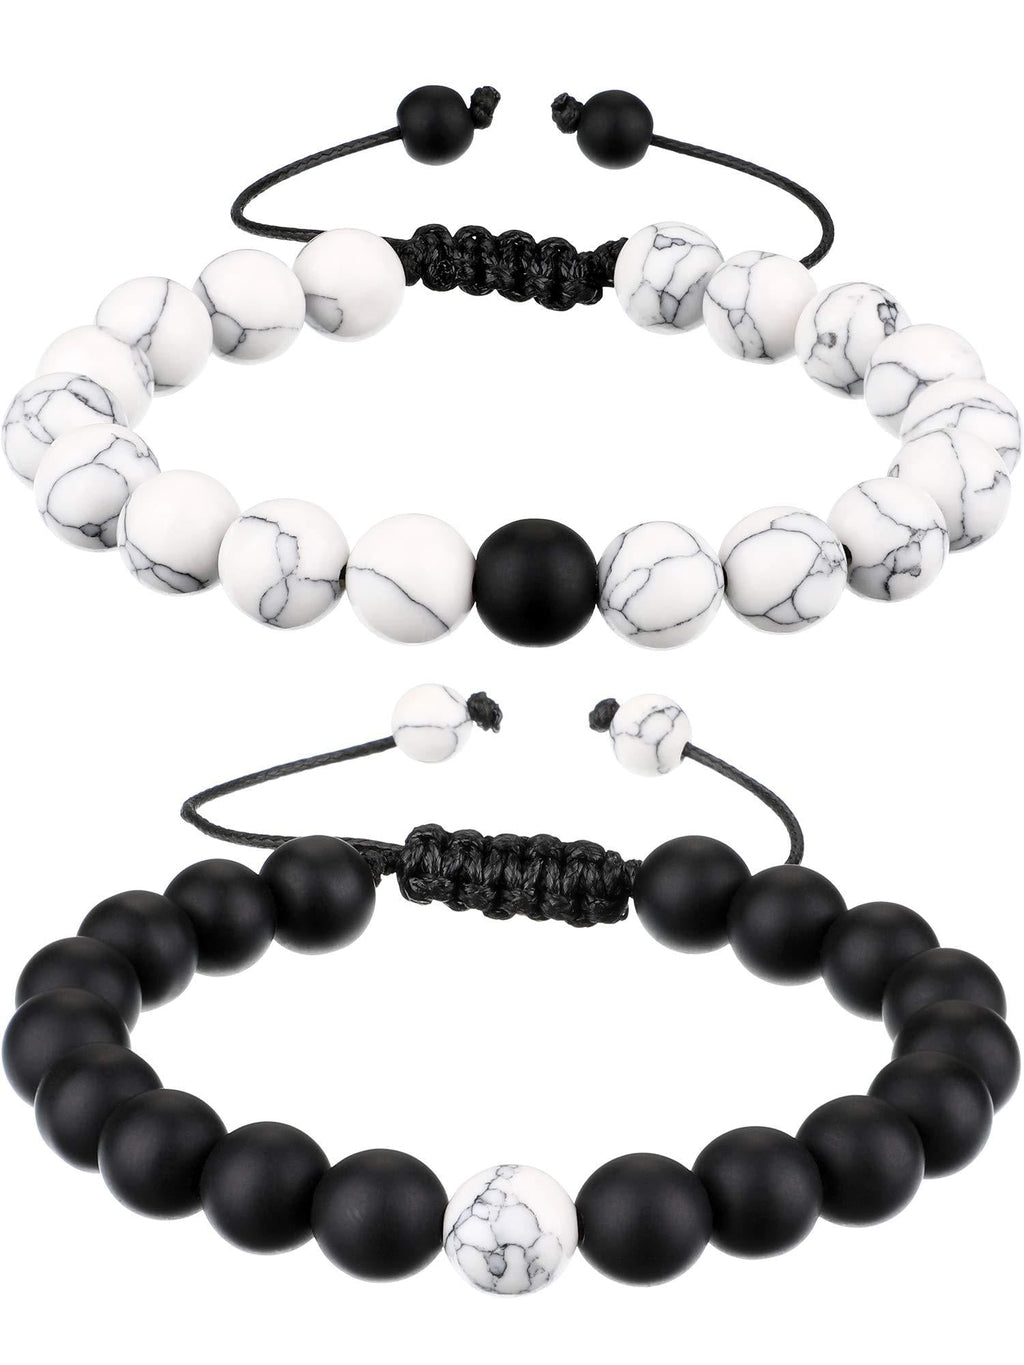 [Australia] - BBTO Howlite Bracelet Black Matte Agate Bracelet Couples Bracelet Distance Bracelet Energy Beads Bracelet for Valentine's Day Present 